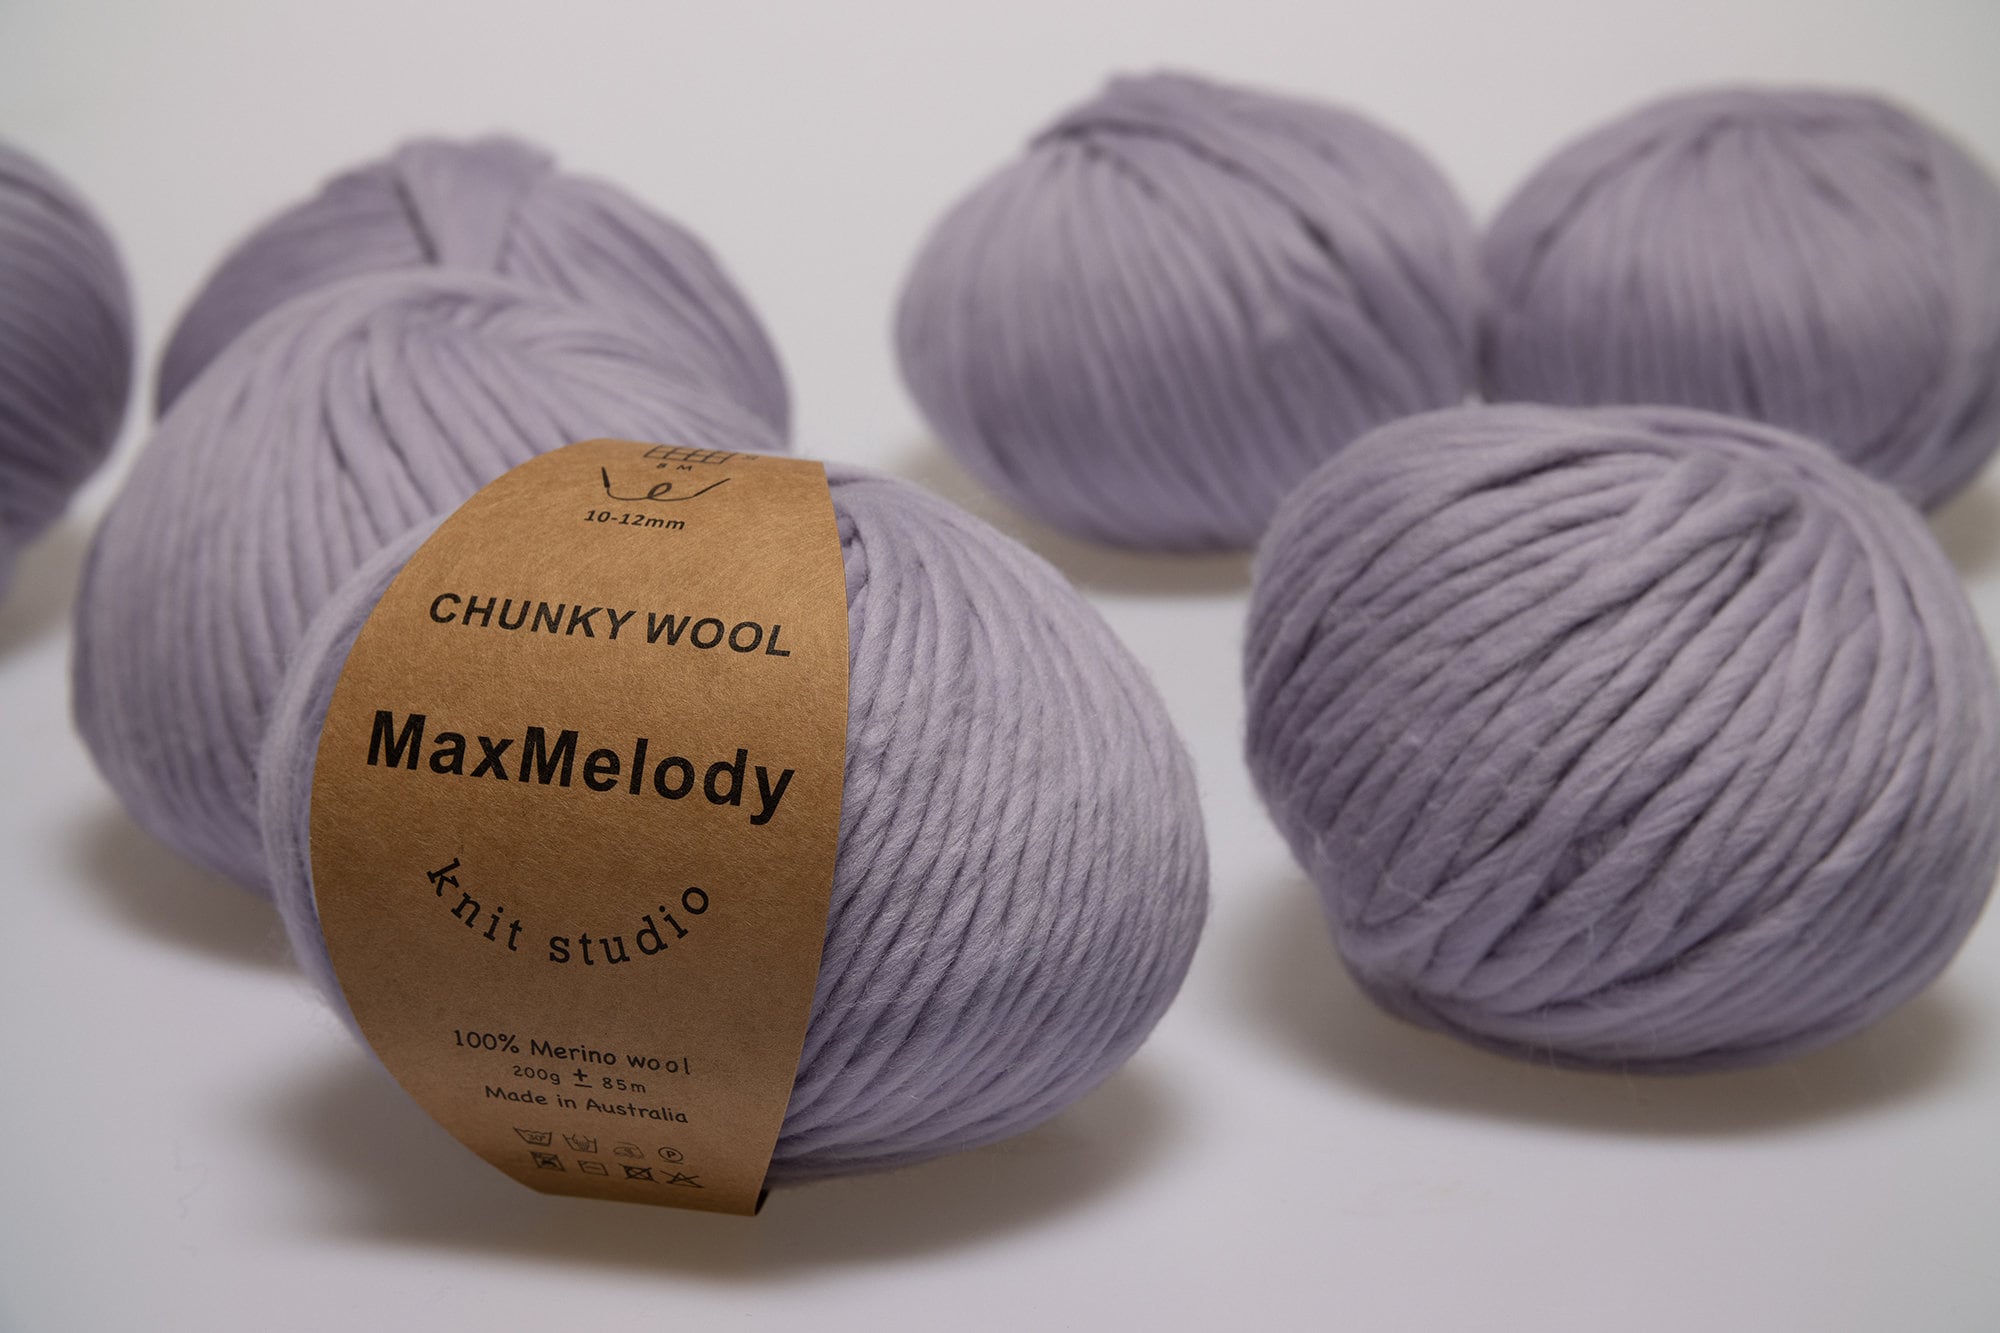 Hyacinth Super Chunky Yarn. Cheeky Chunky Yarn by Wool Couture. 200g Skein Chunky  Yarn in Hyacinth Purple. Pure Merino Wool. 